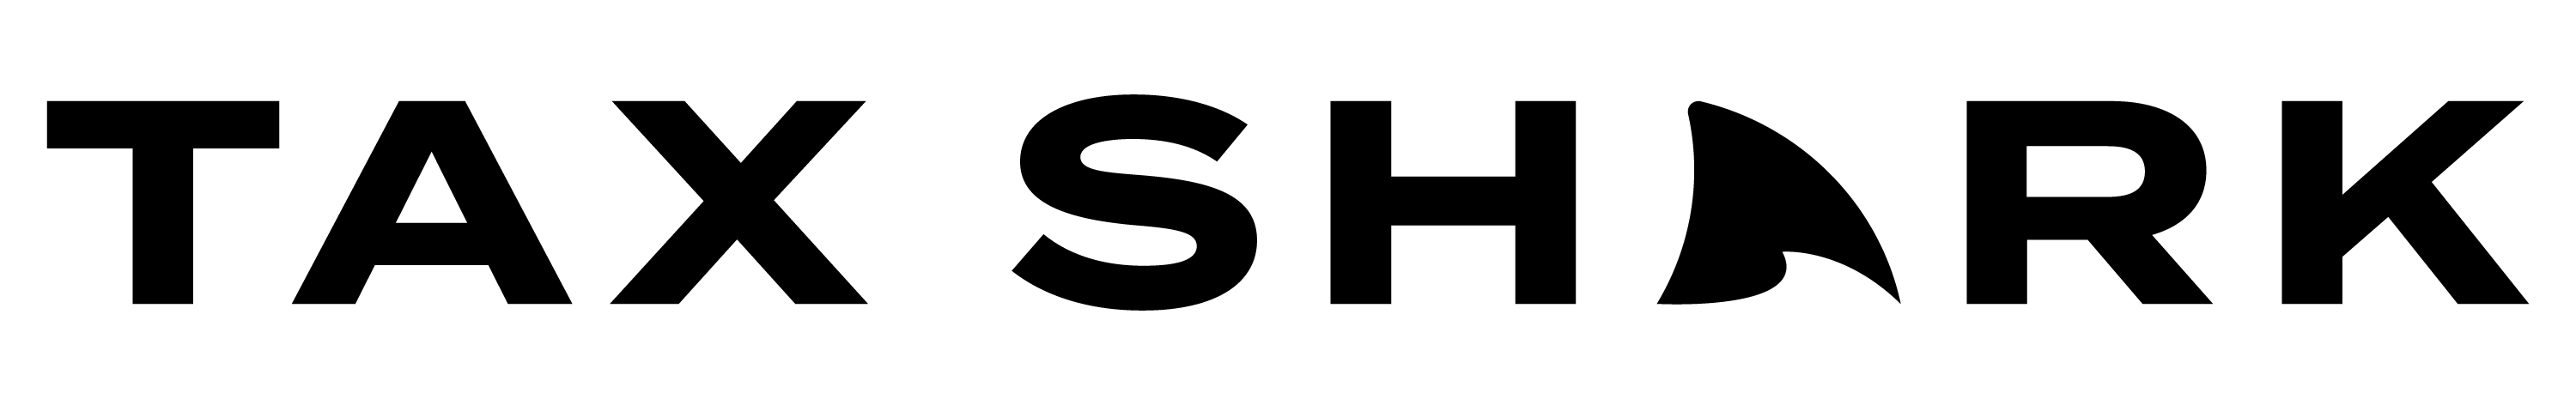 logo-transparent-black